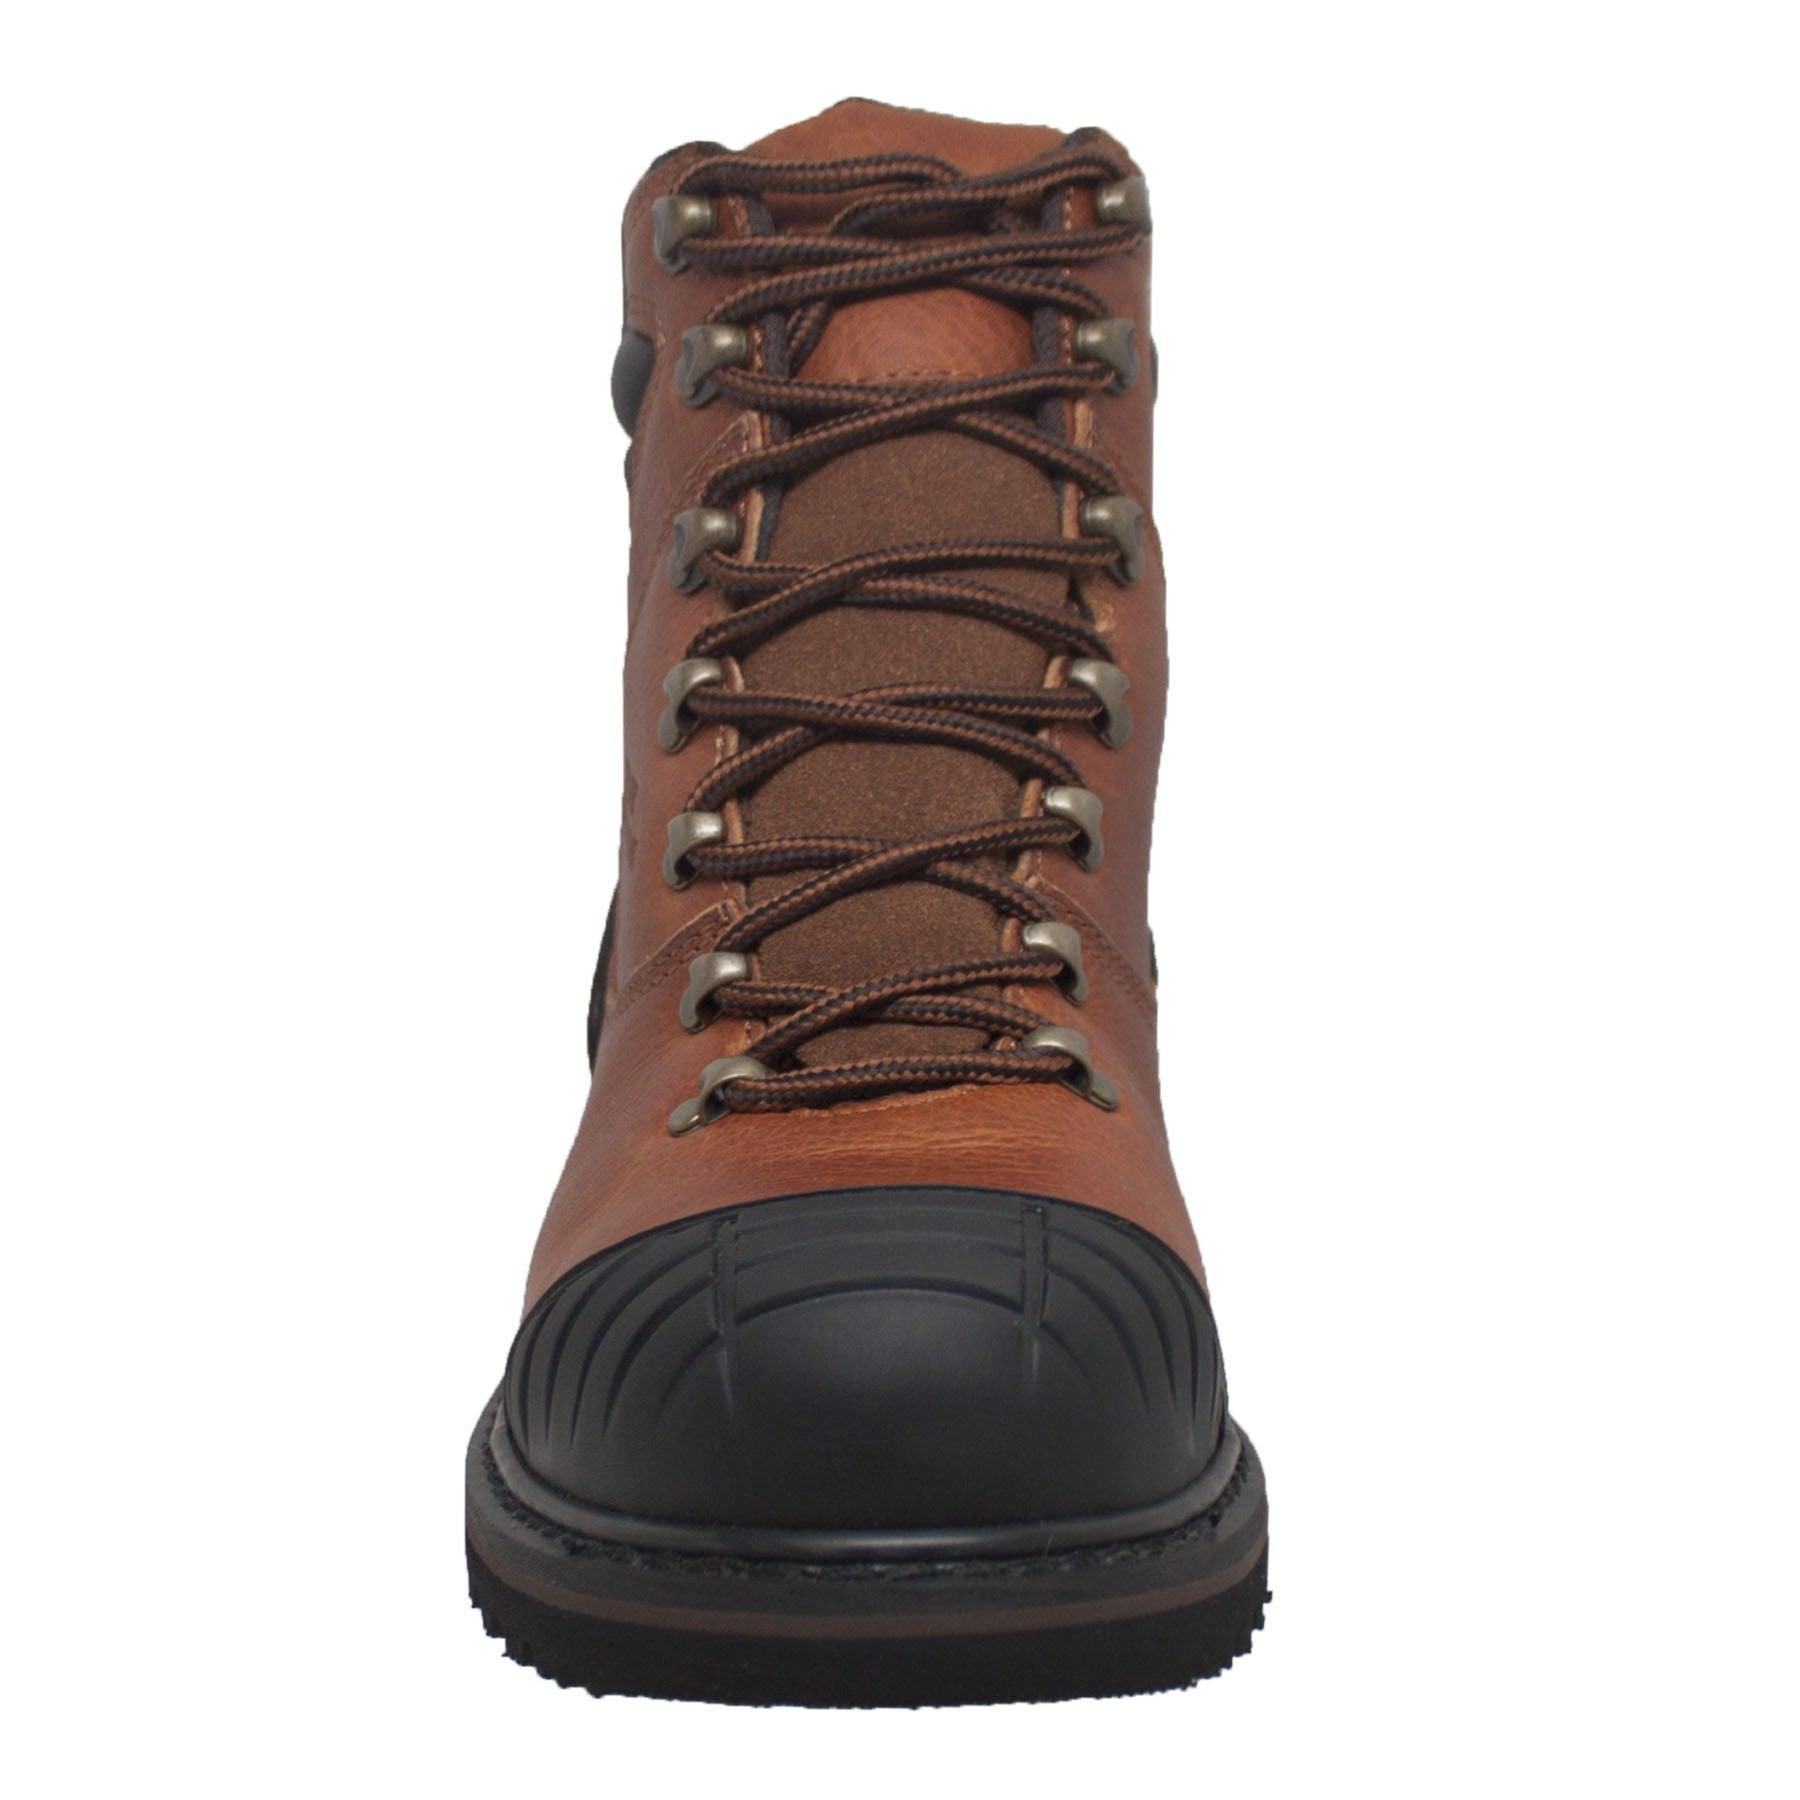 AdTec Men's 7" Steel Toe Work Boot Reddish Brown - Flyclothing LLC